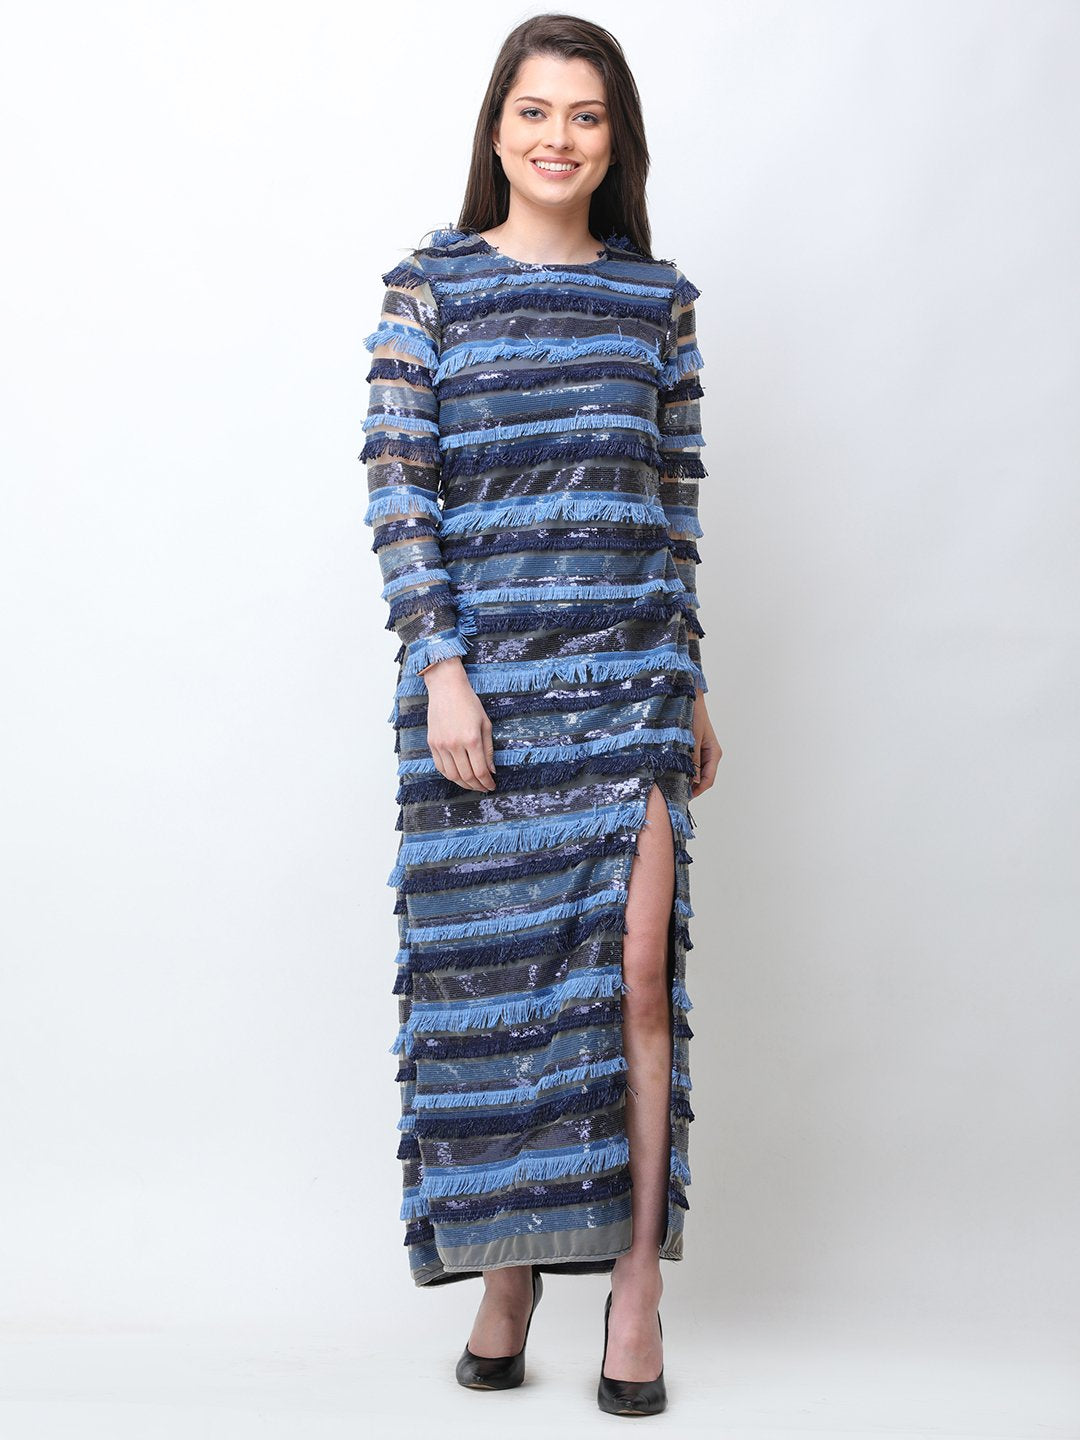 Scorpius Blue front cut sequin dress